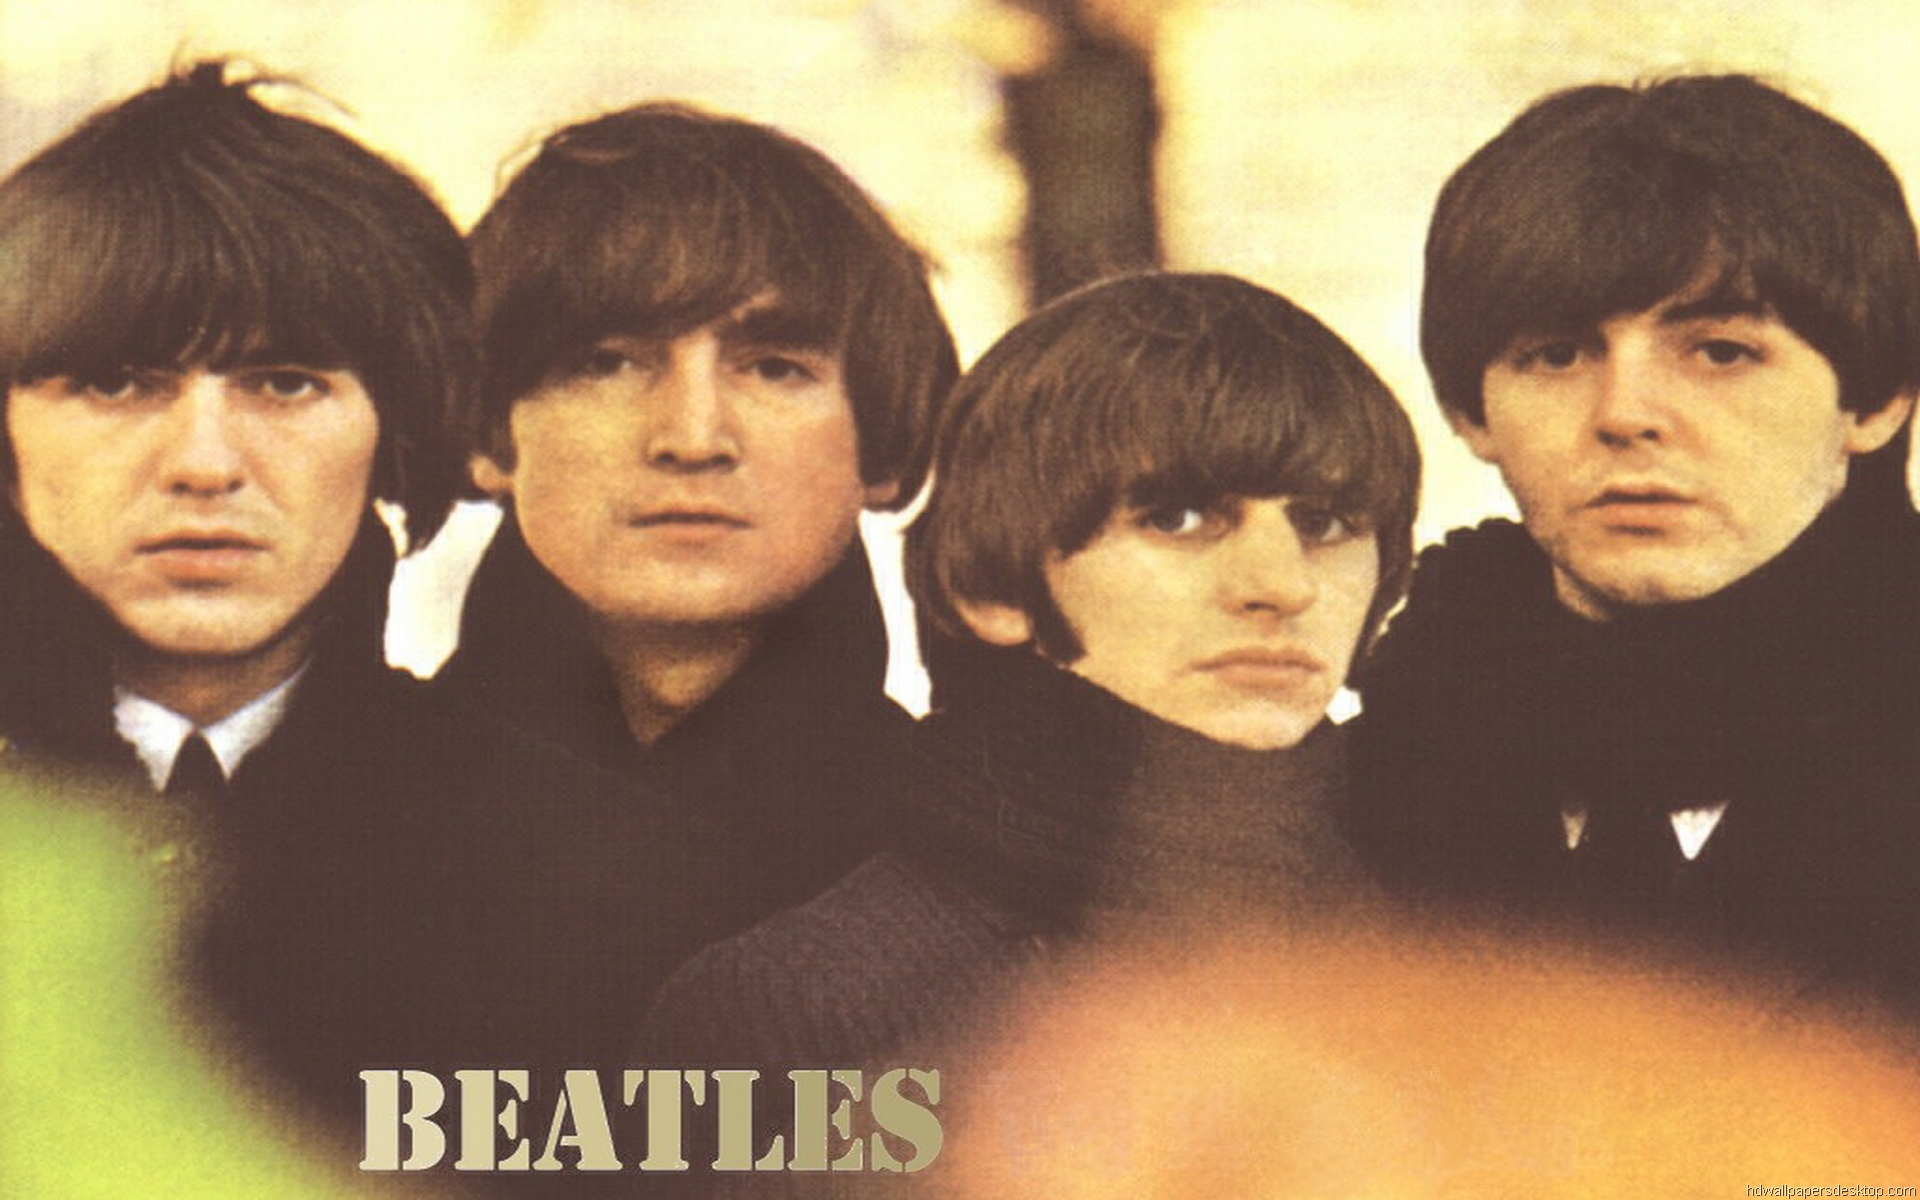 The Beatles Wallpaper Widescreen Wallpapers Backgrounds 1920x1200